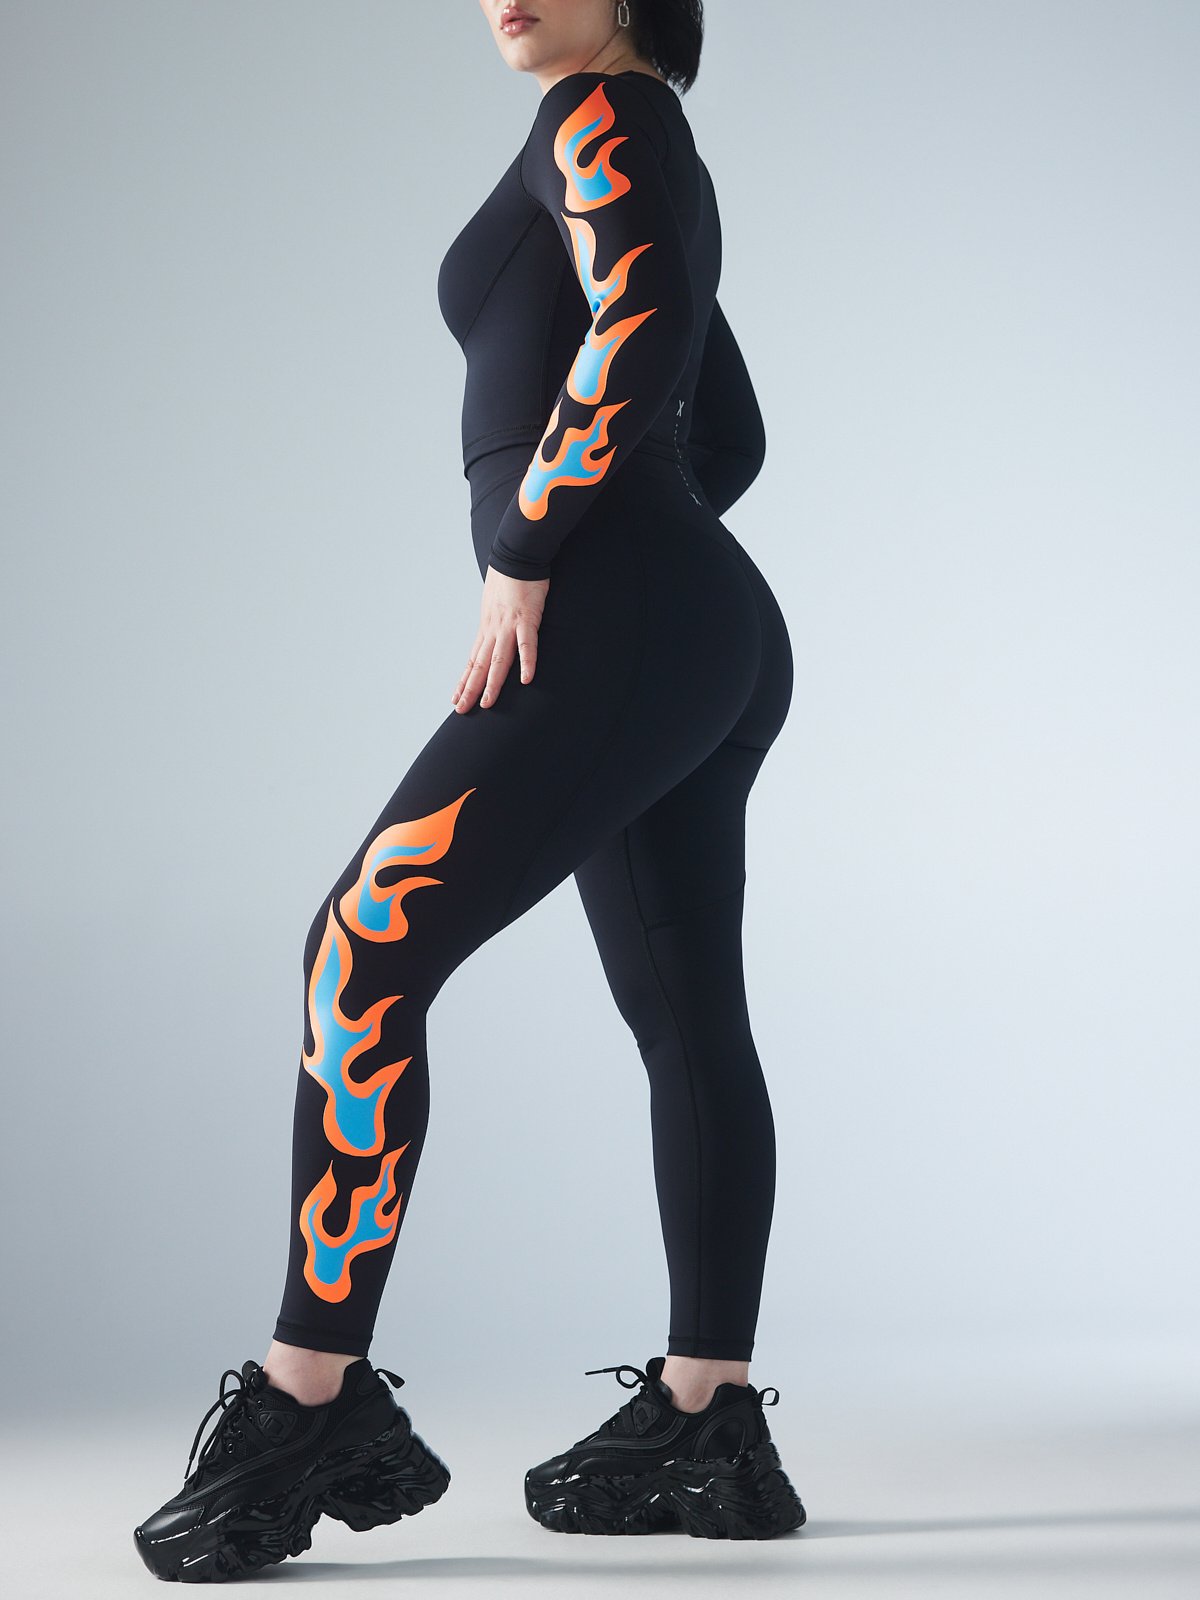 Savage X Fenty Rihanna Hotline High-Waist Color Black Caviar Legging Size M